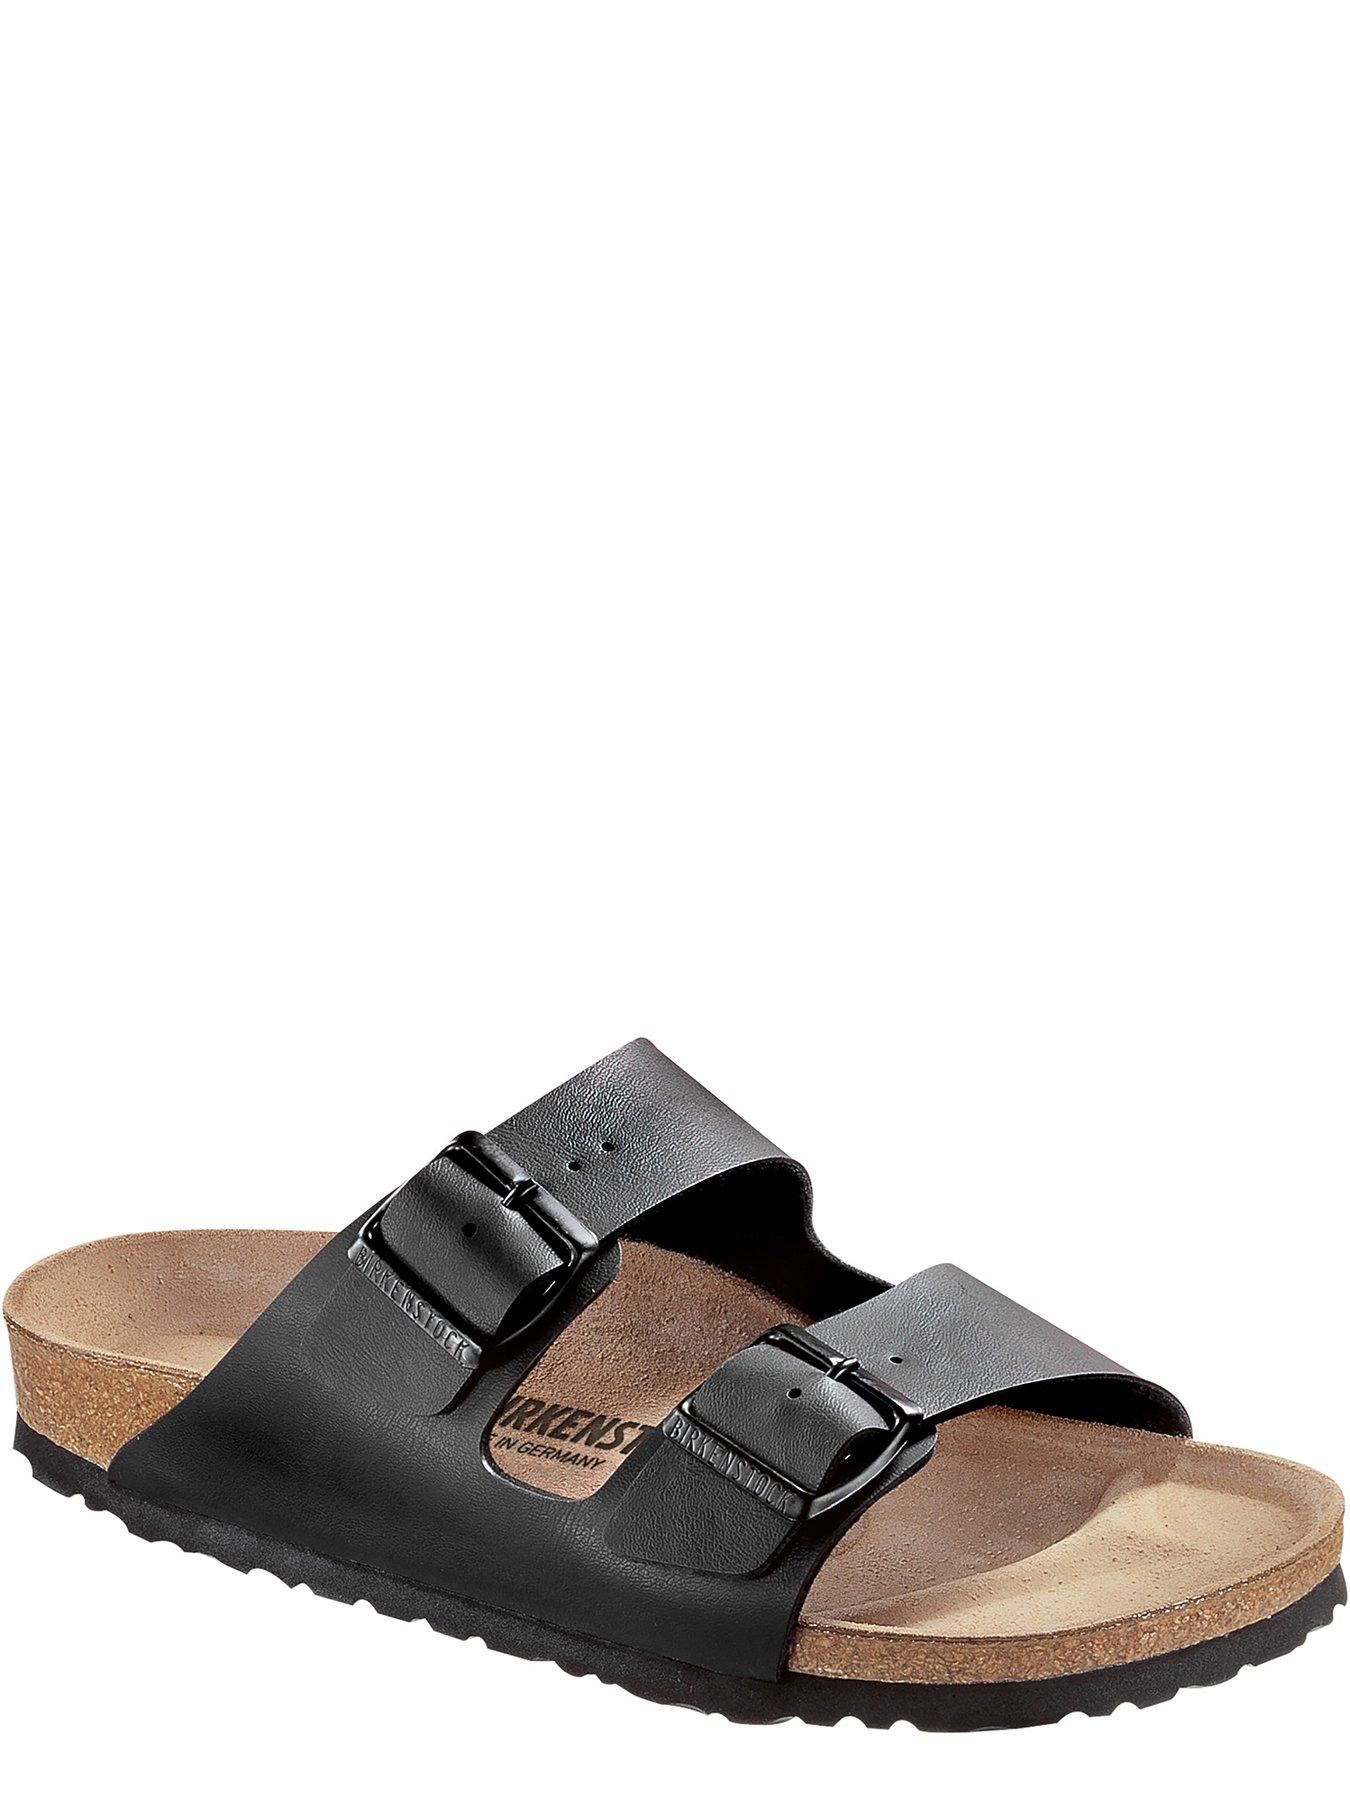 Birkenstock Arizona Birko-Flor Soft Footbed Sandal - Black | Very.co.uk